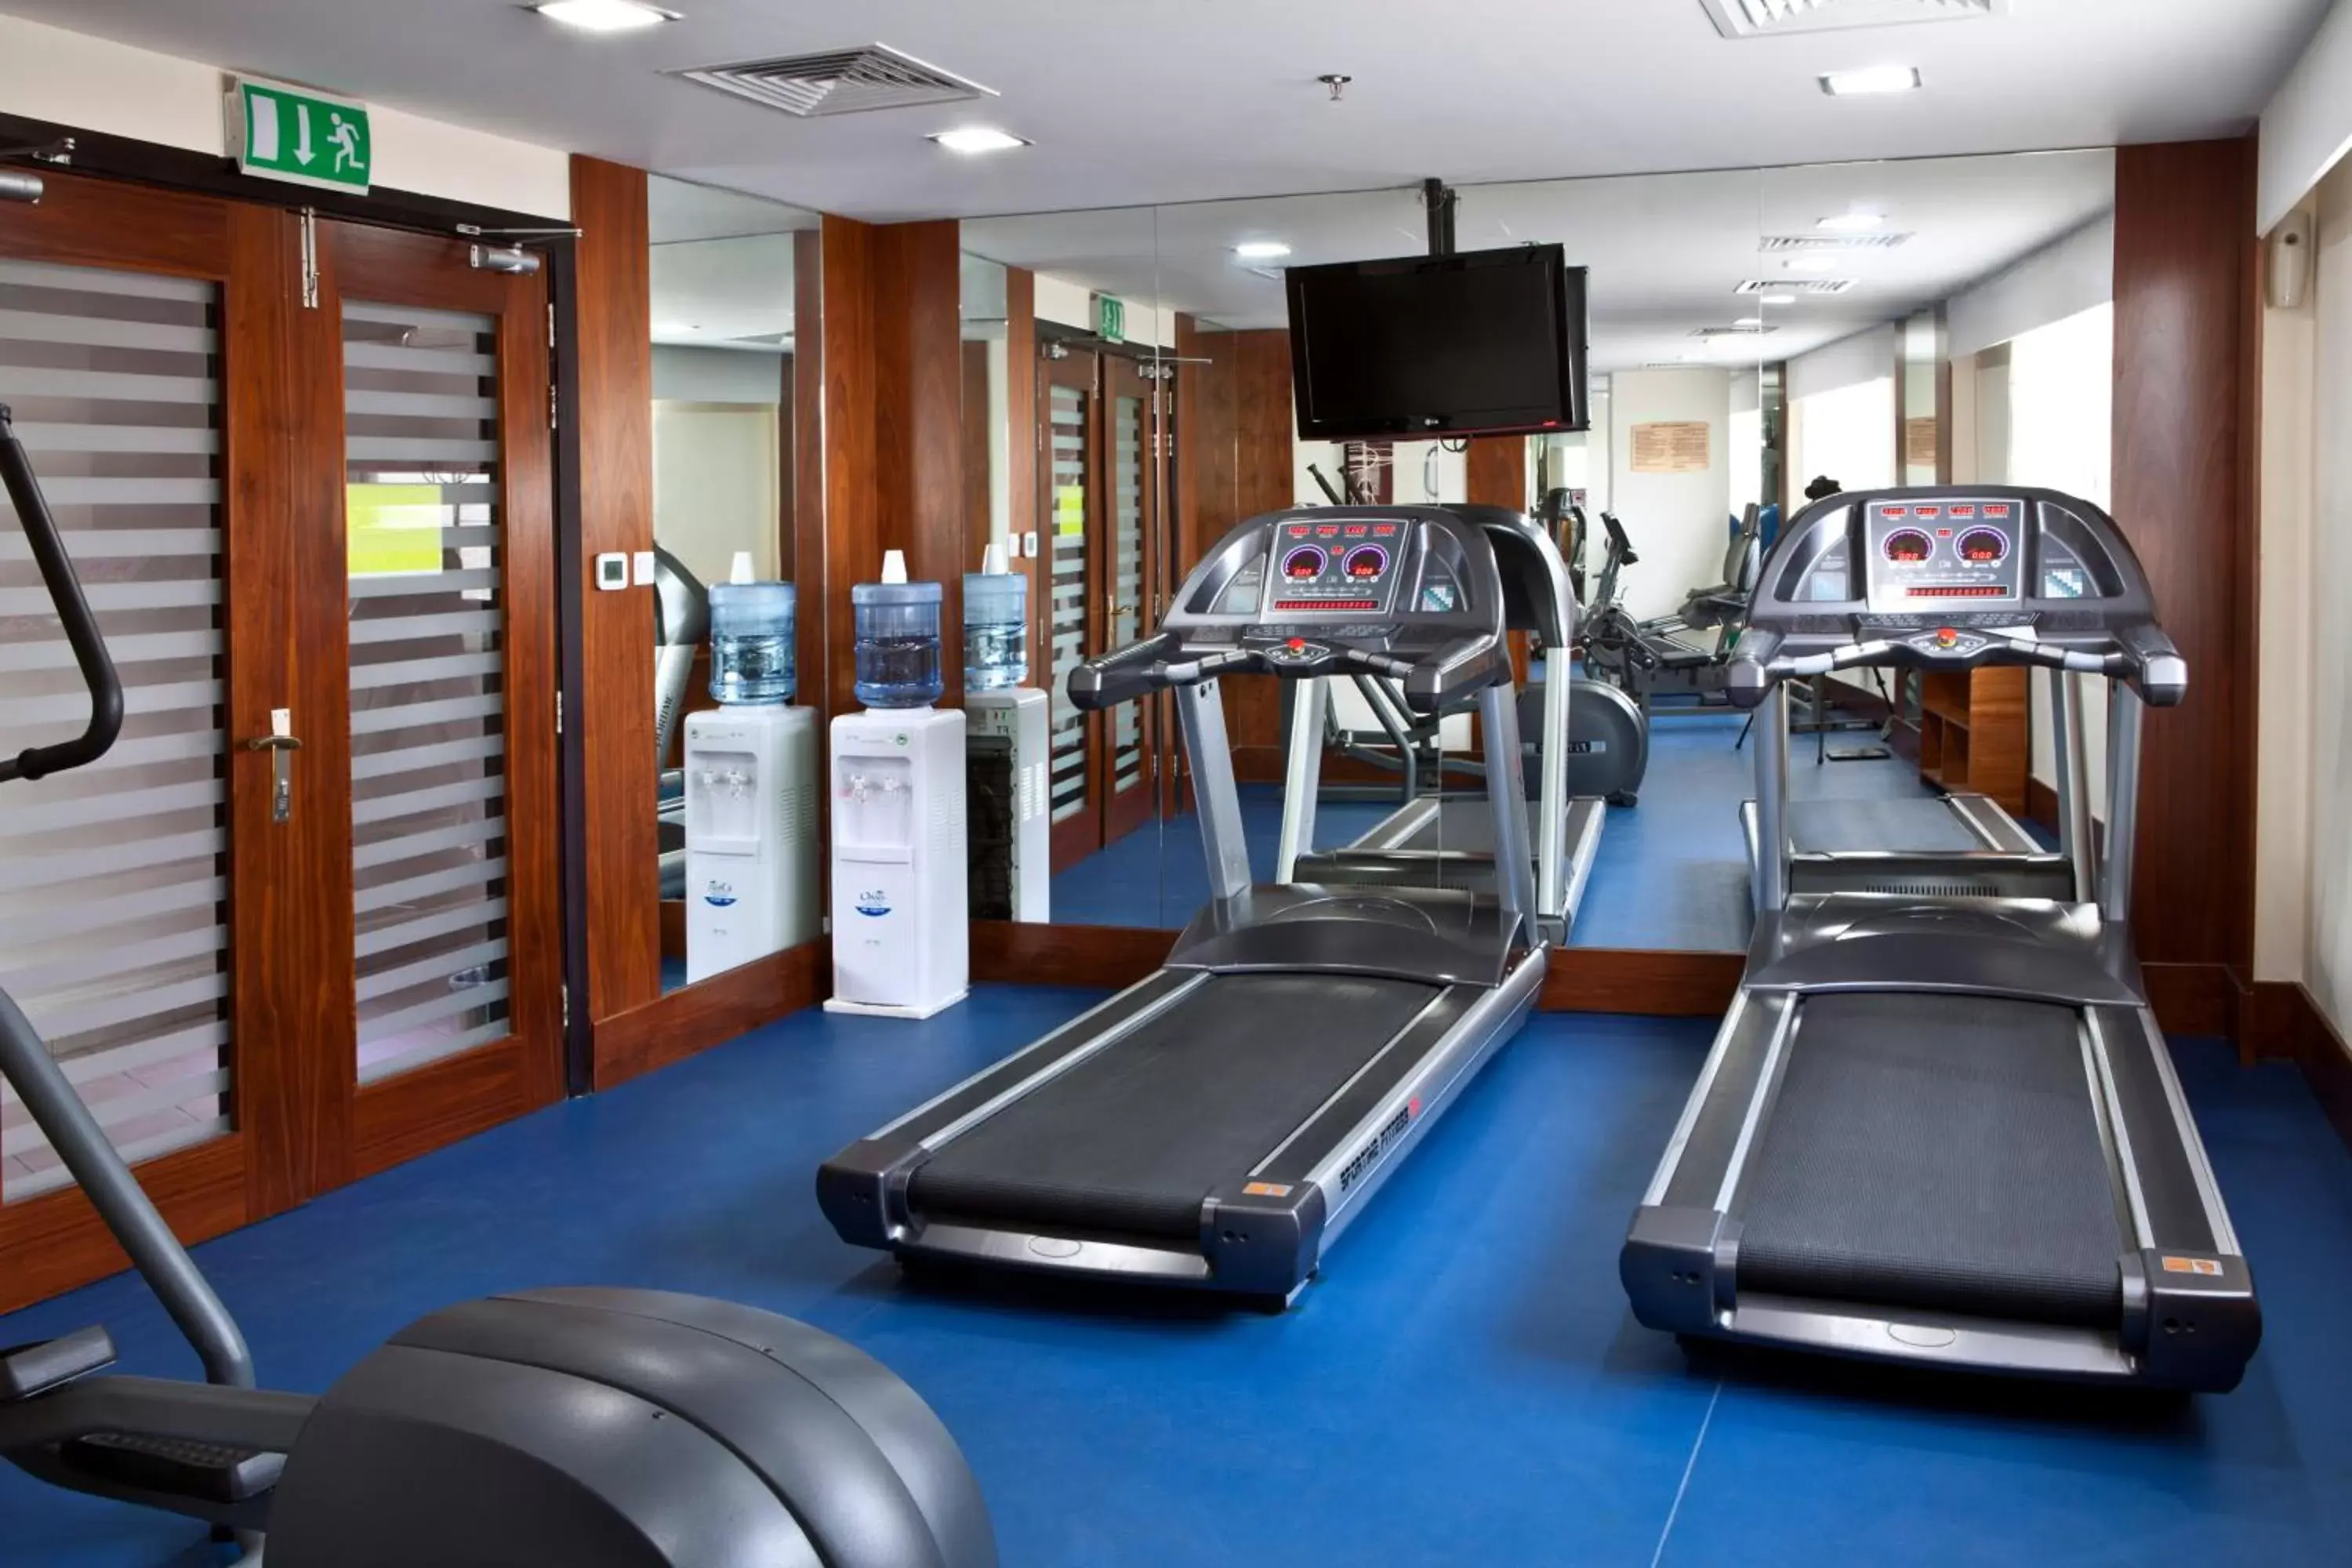 Fitness centre/facilities, Fitness Center/Facilities in Landmark Grand Hotel